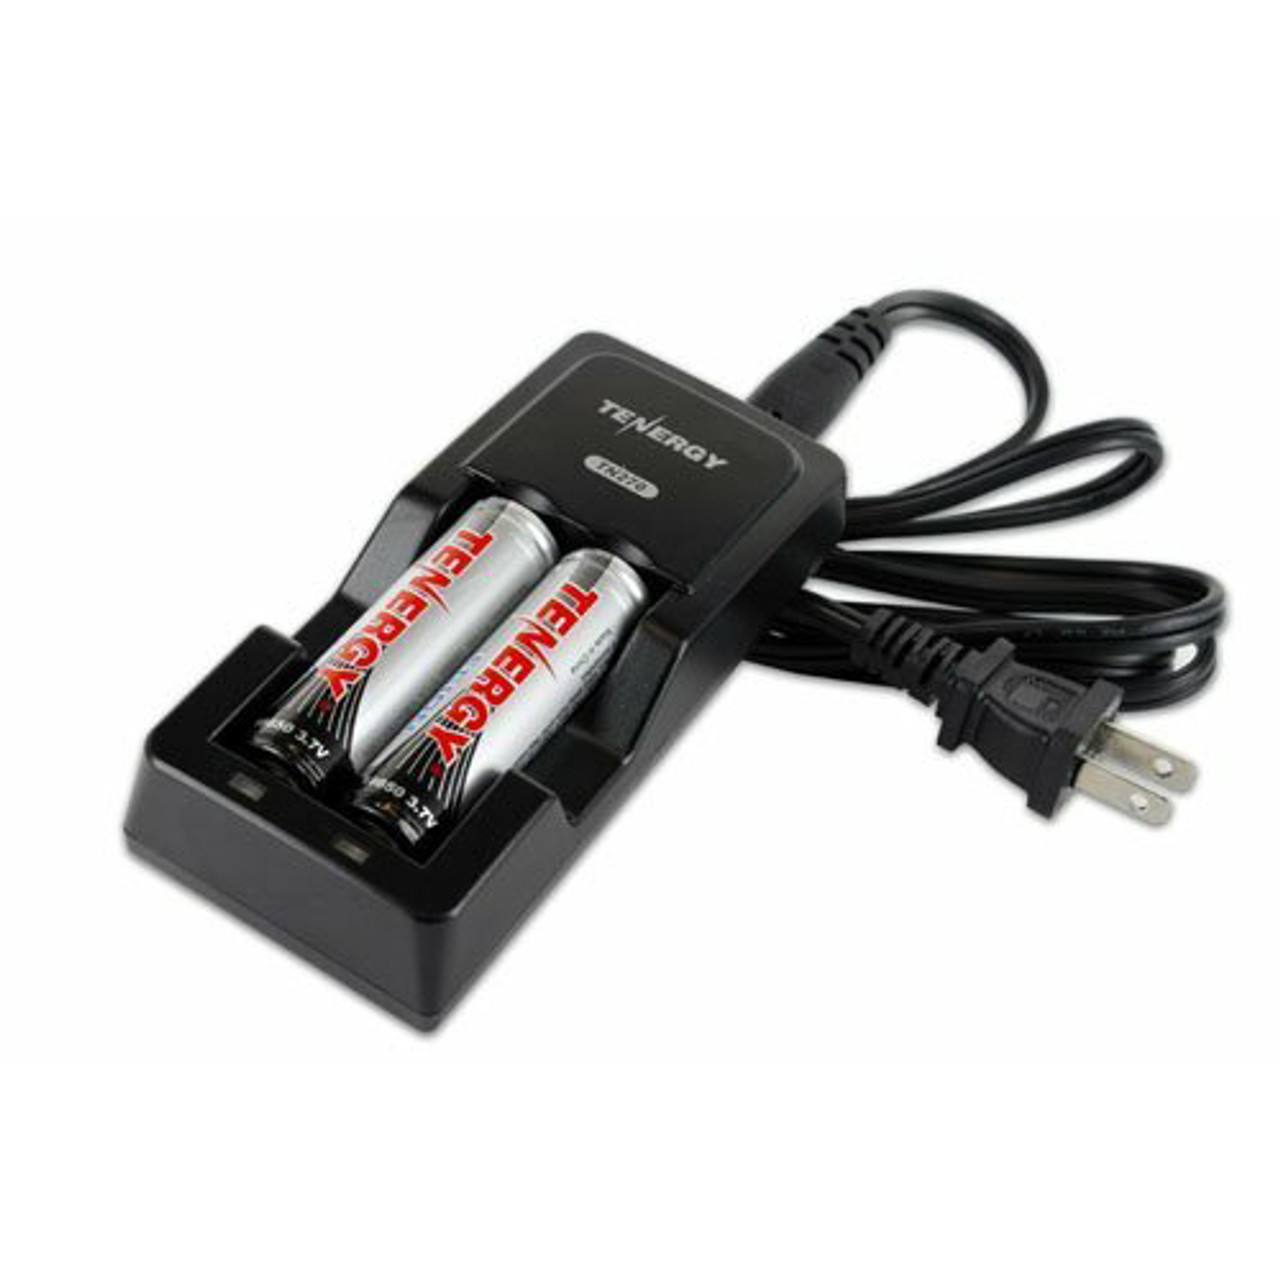 Tenergy TN270 Li-ion Battery Charger + 2 Li-ion 18650 3.7V 2600mAh Button Top Battery w/ PCB (w/ Car Plug)